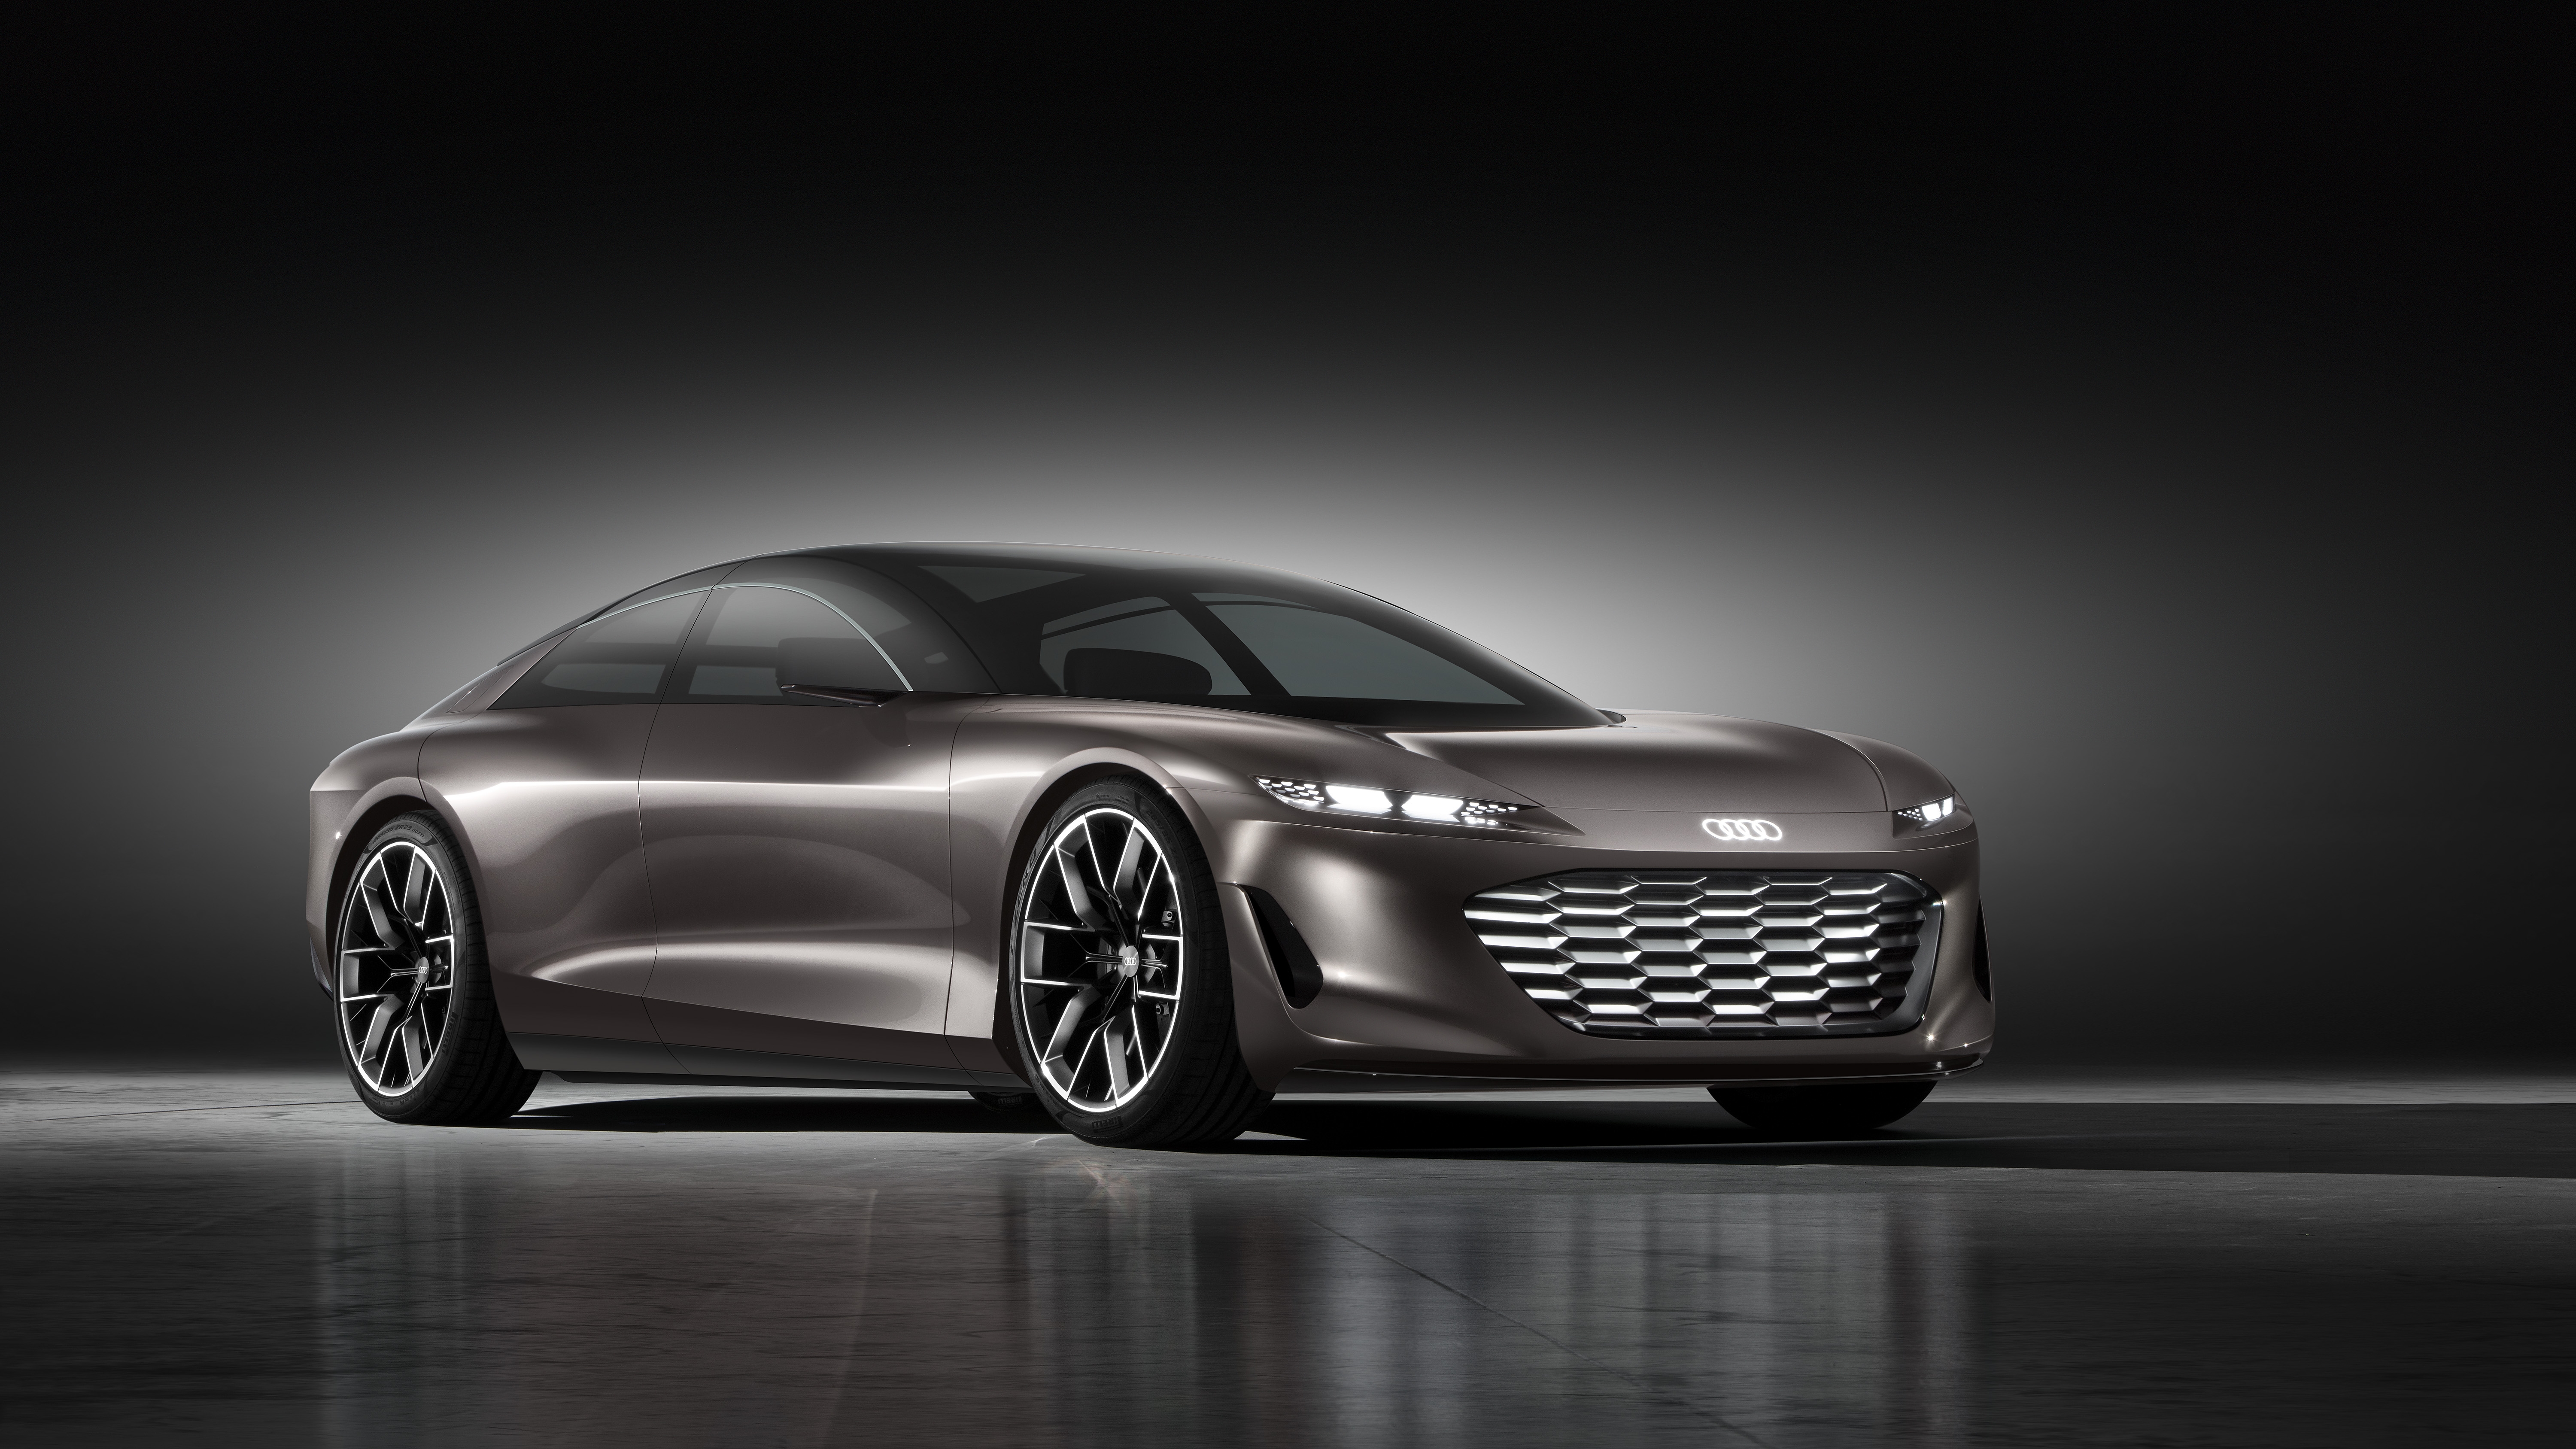 HD wallpaper, Audi Grandsphere Concept, 5K, Electric Cars, Concept Cars, Dark Background, 2021